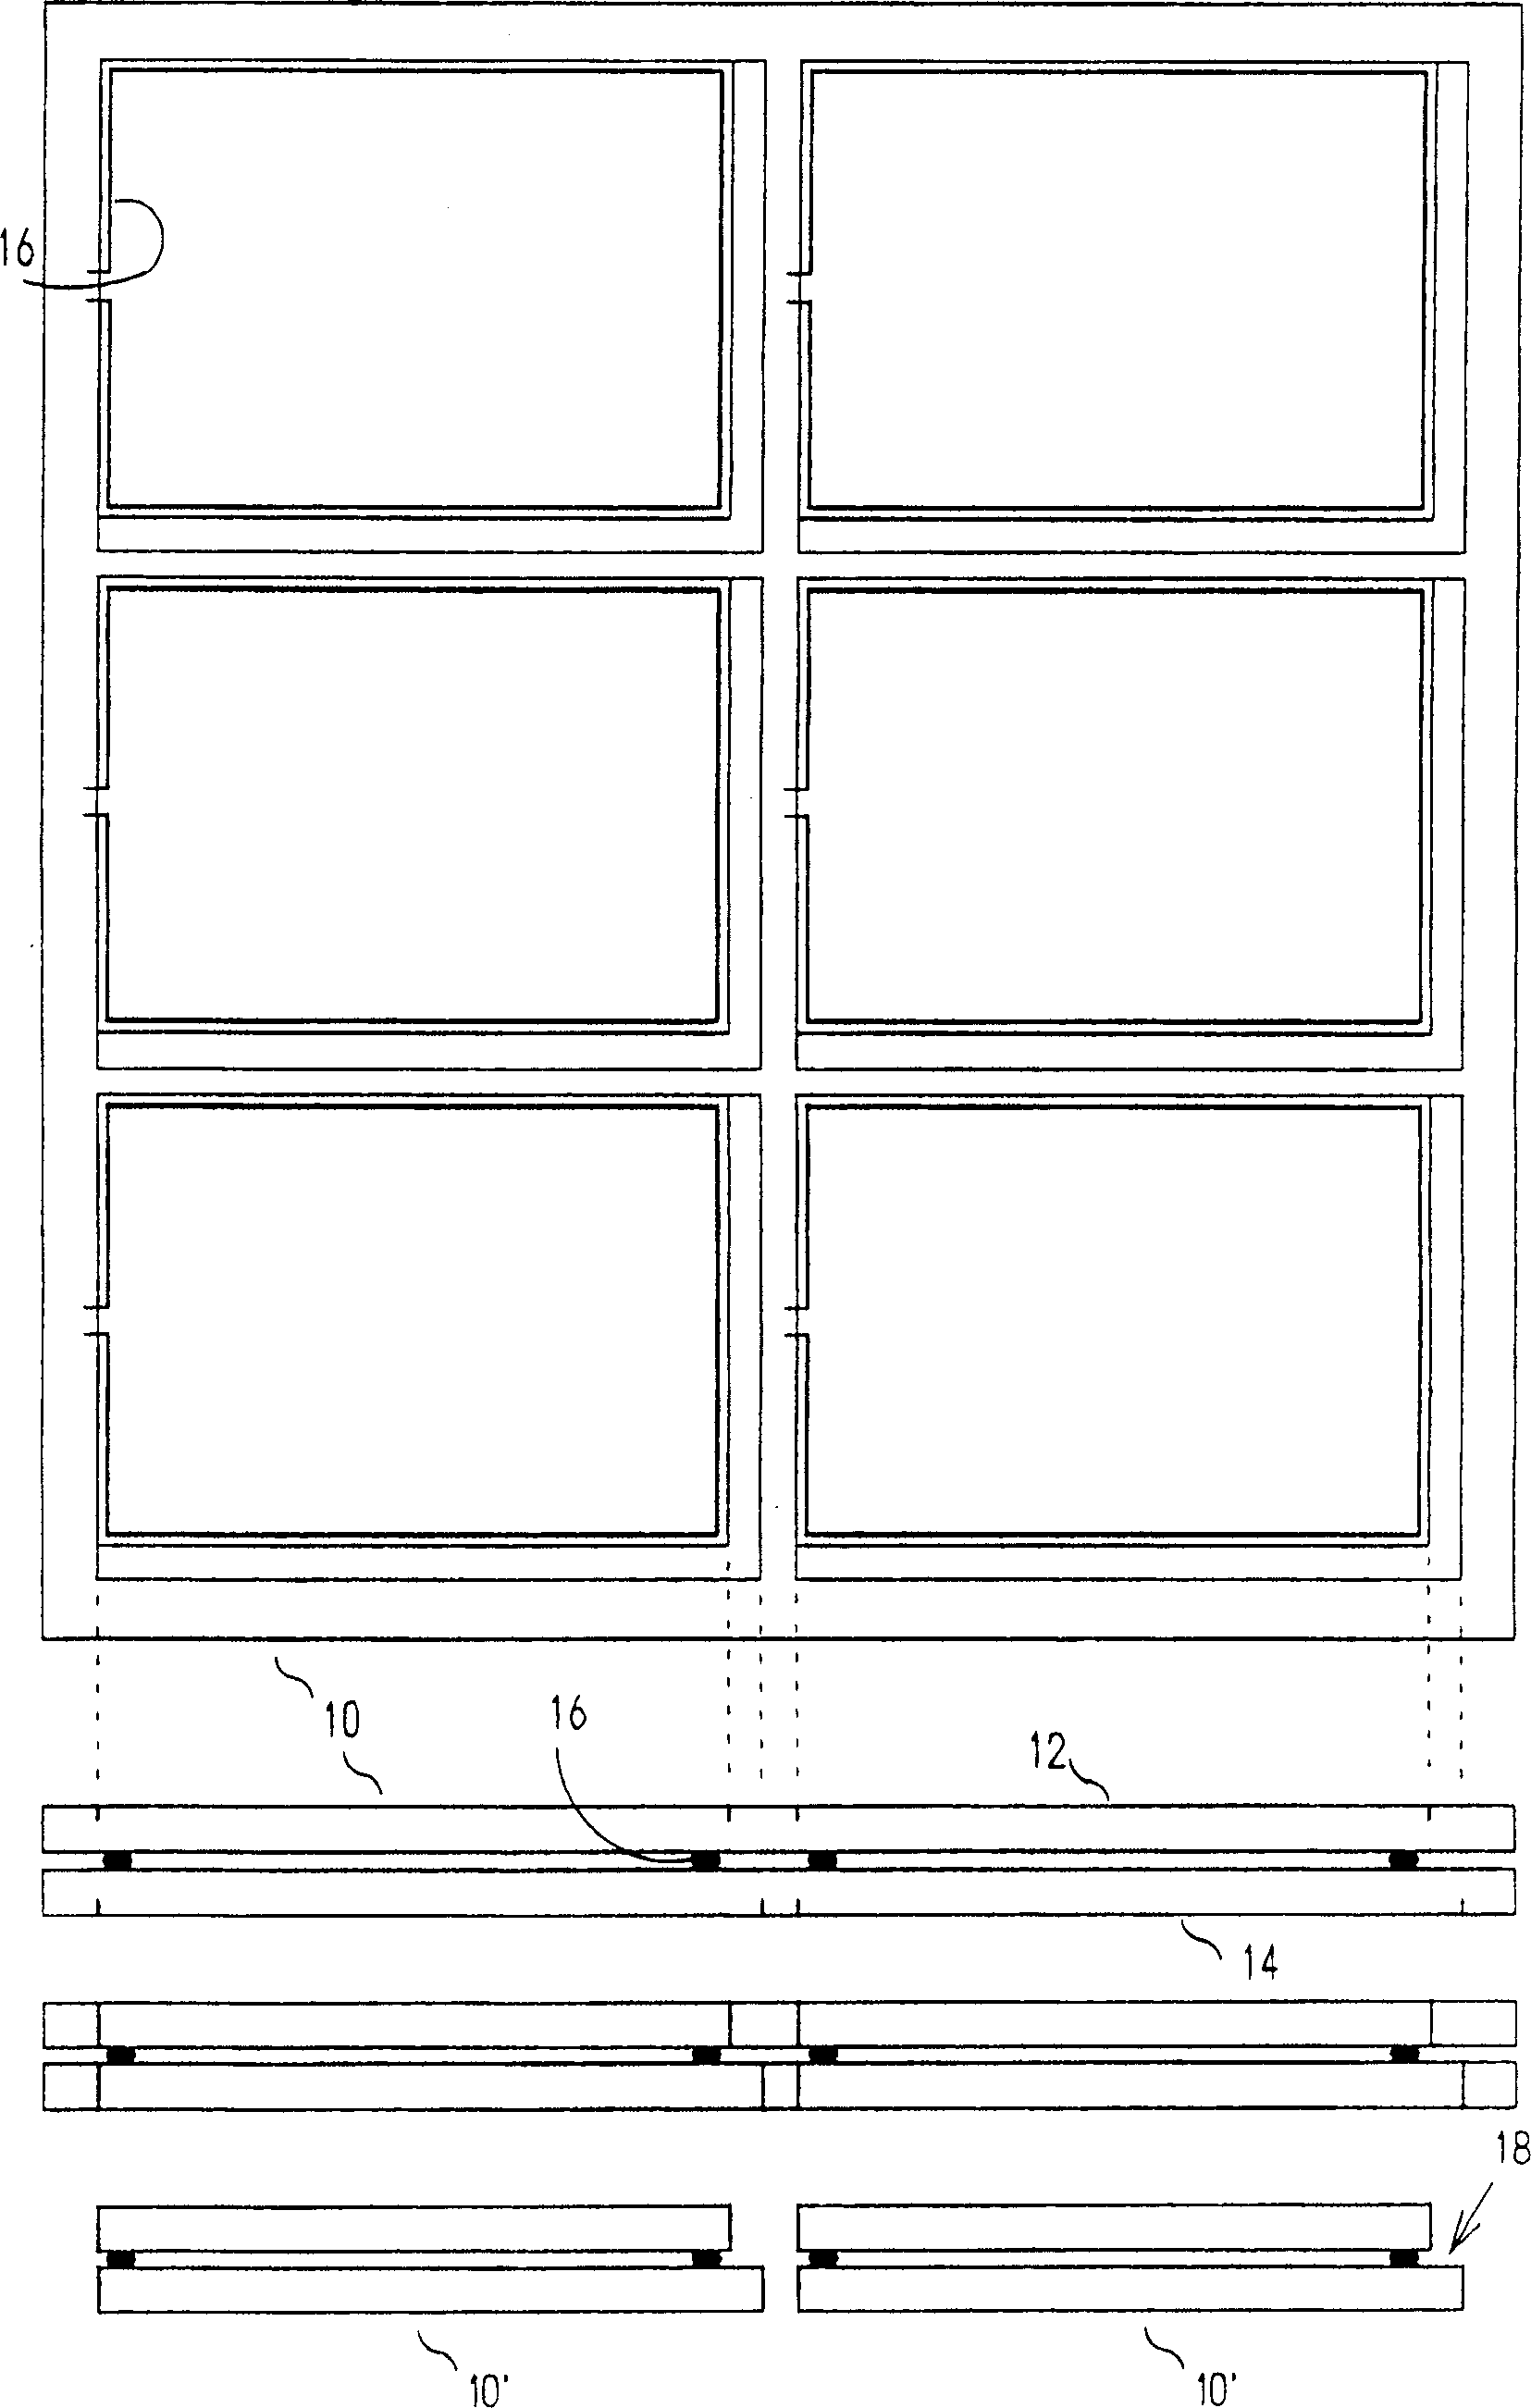 Flat display panel and method of dividing the flat display panel